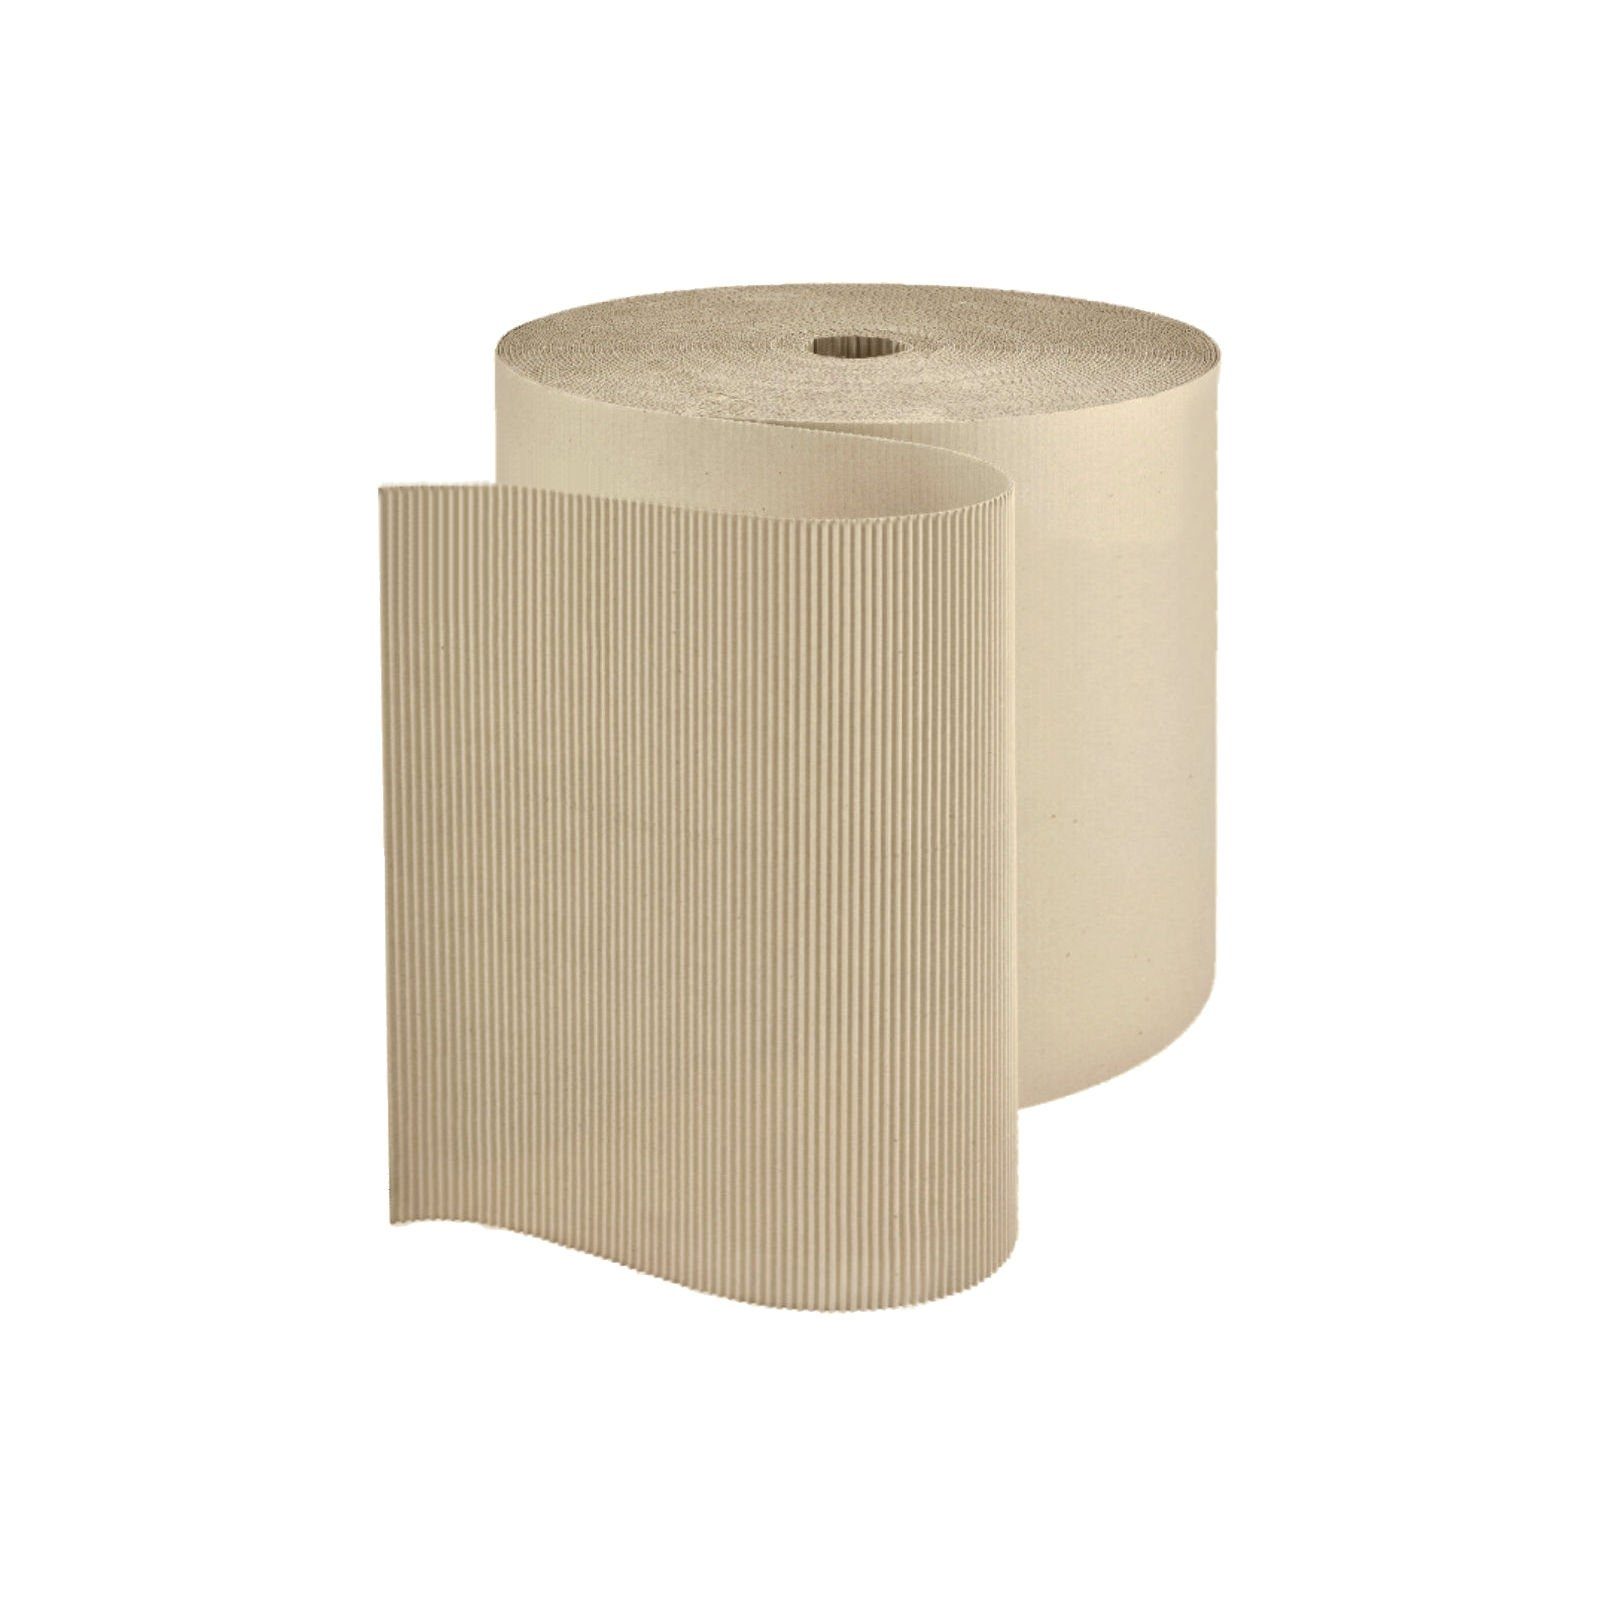 KK Verpackungen Seidenpapier, Rollen-Wellenpappe Grau Polstermaterial Wellpappe 0,5m Breite